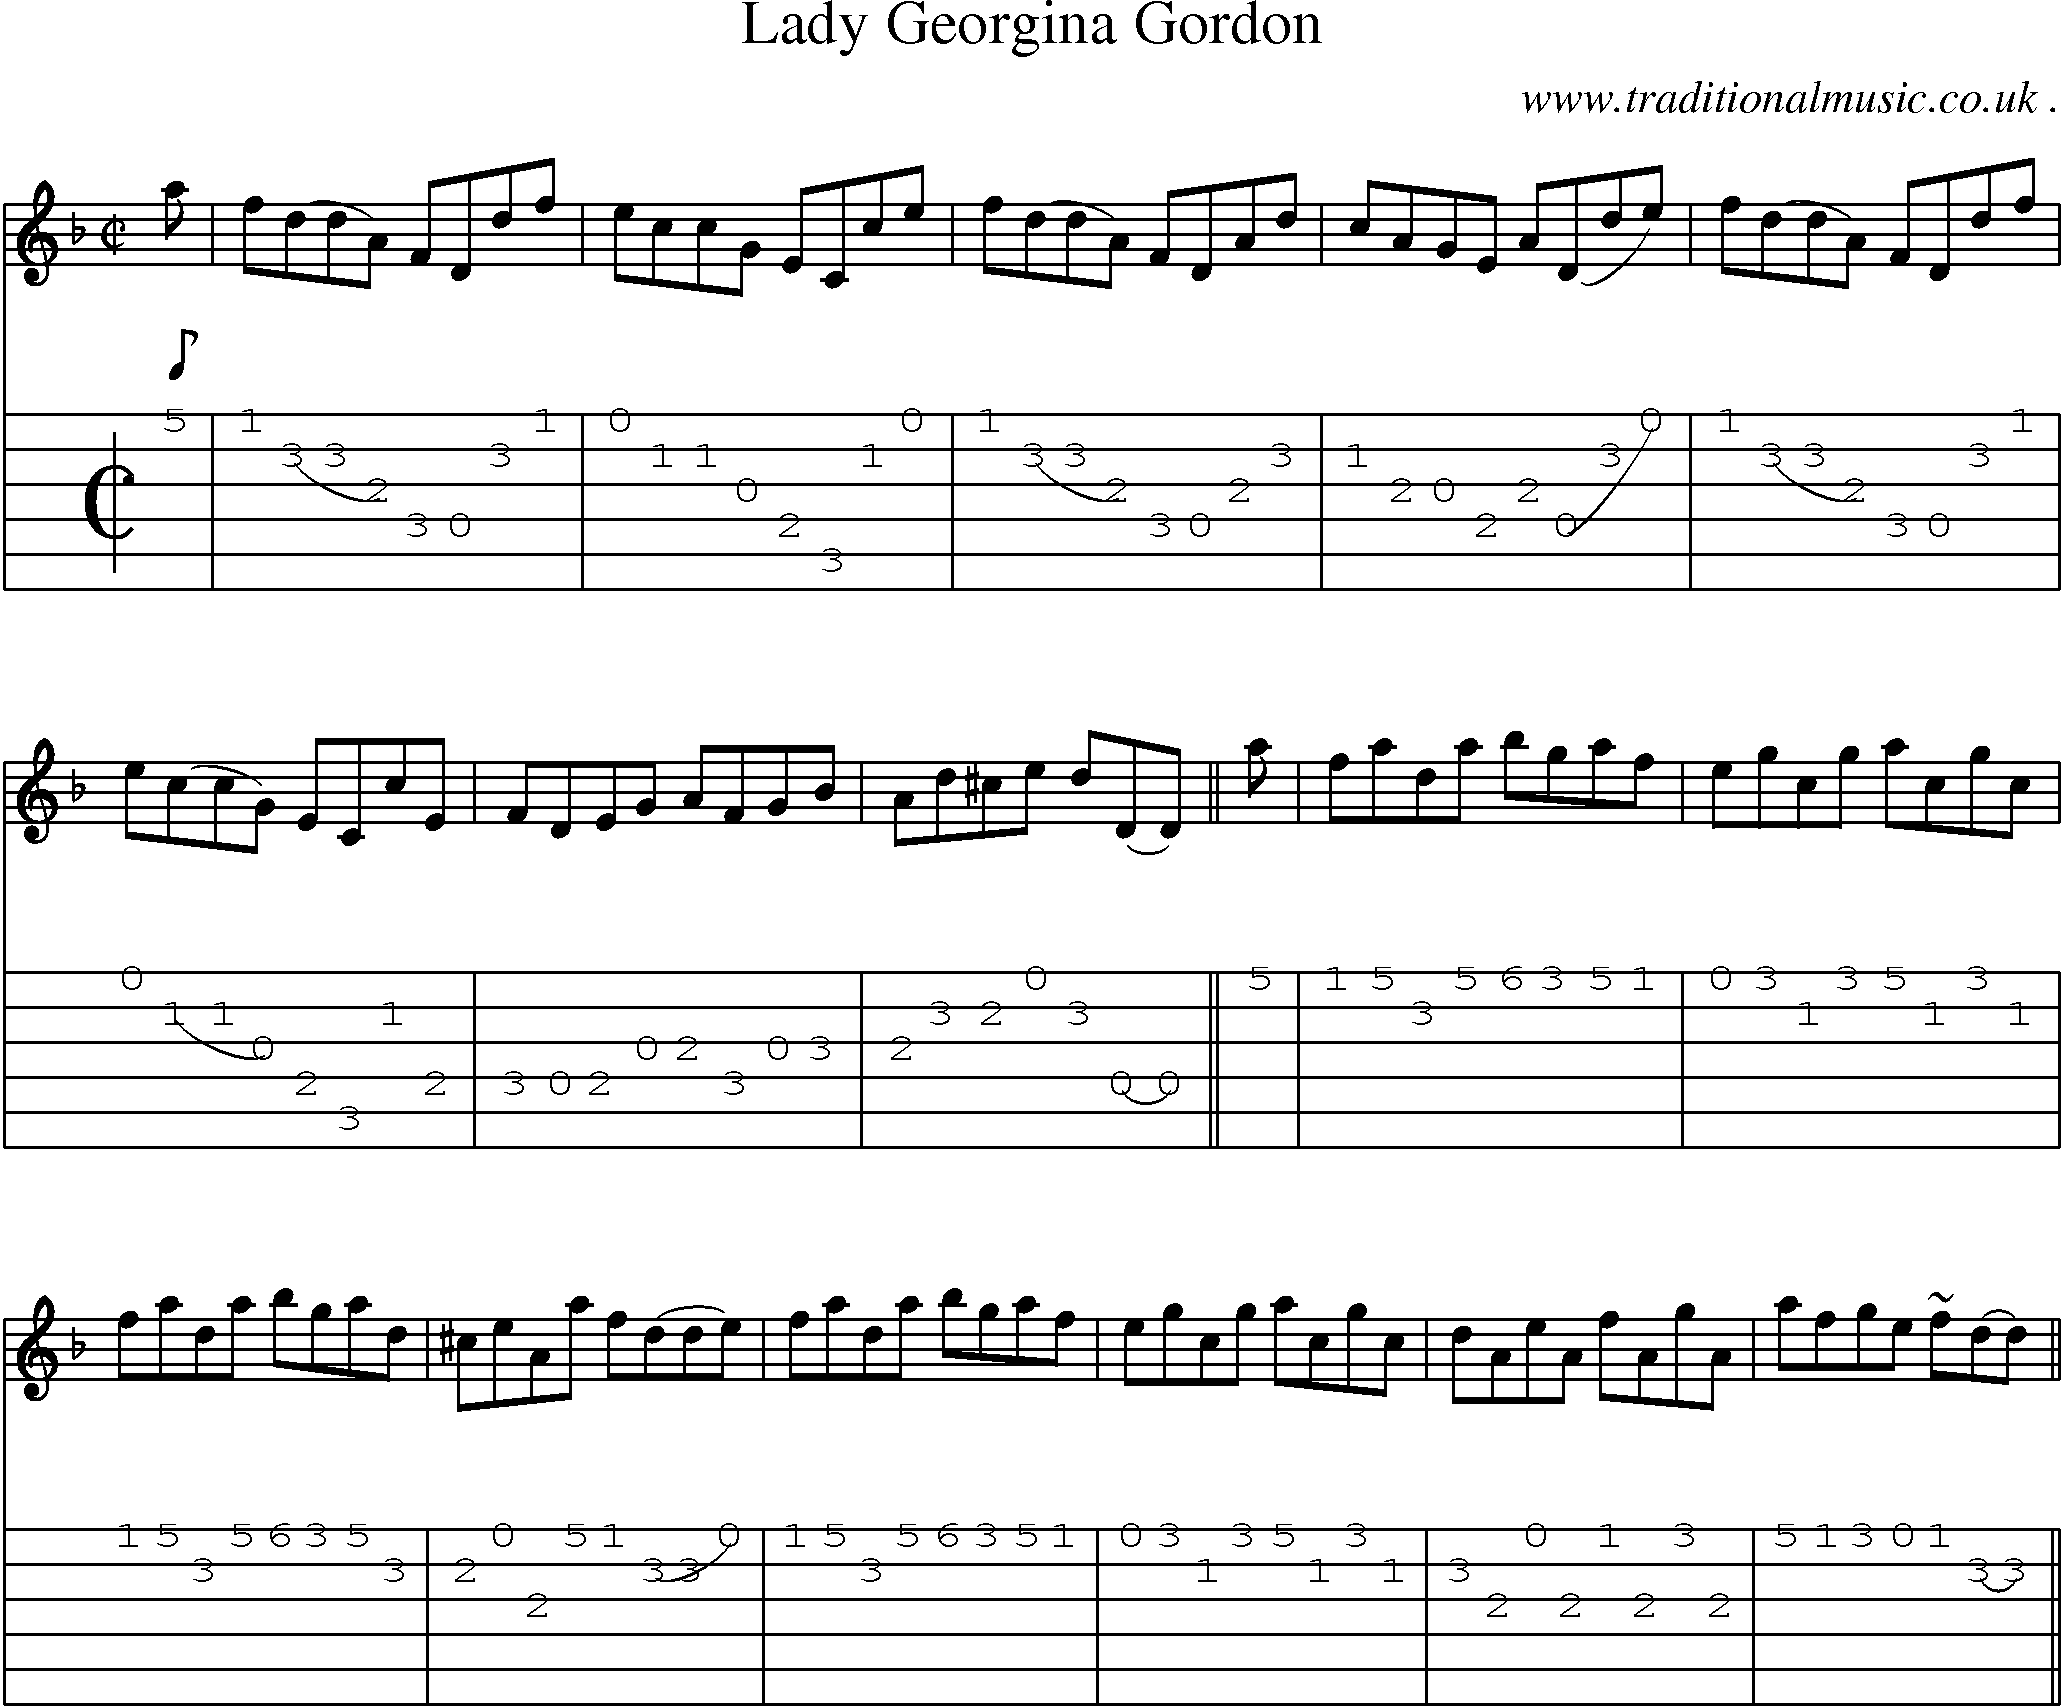 Sheet-music  score, Chords and Guitar Tabs for Lady Georgina Gordon